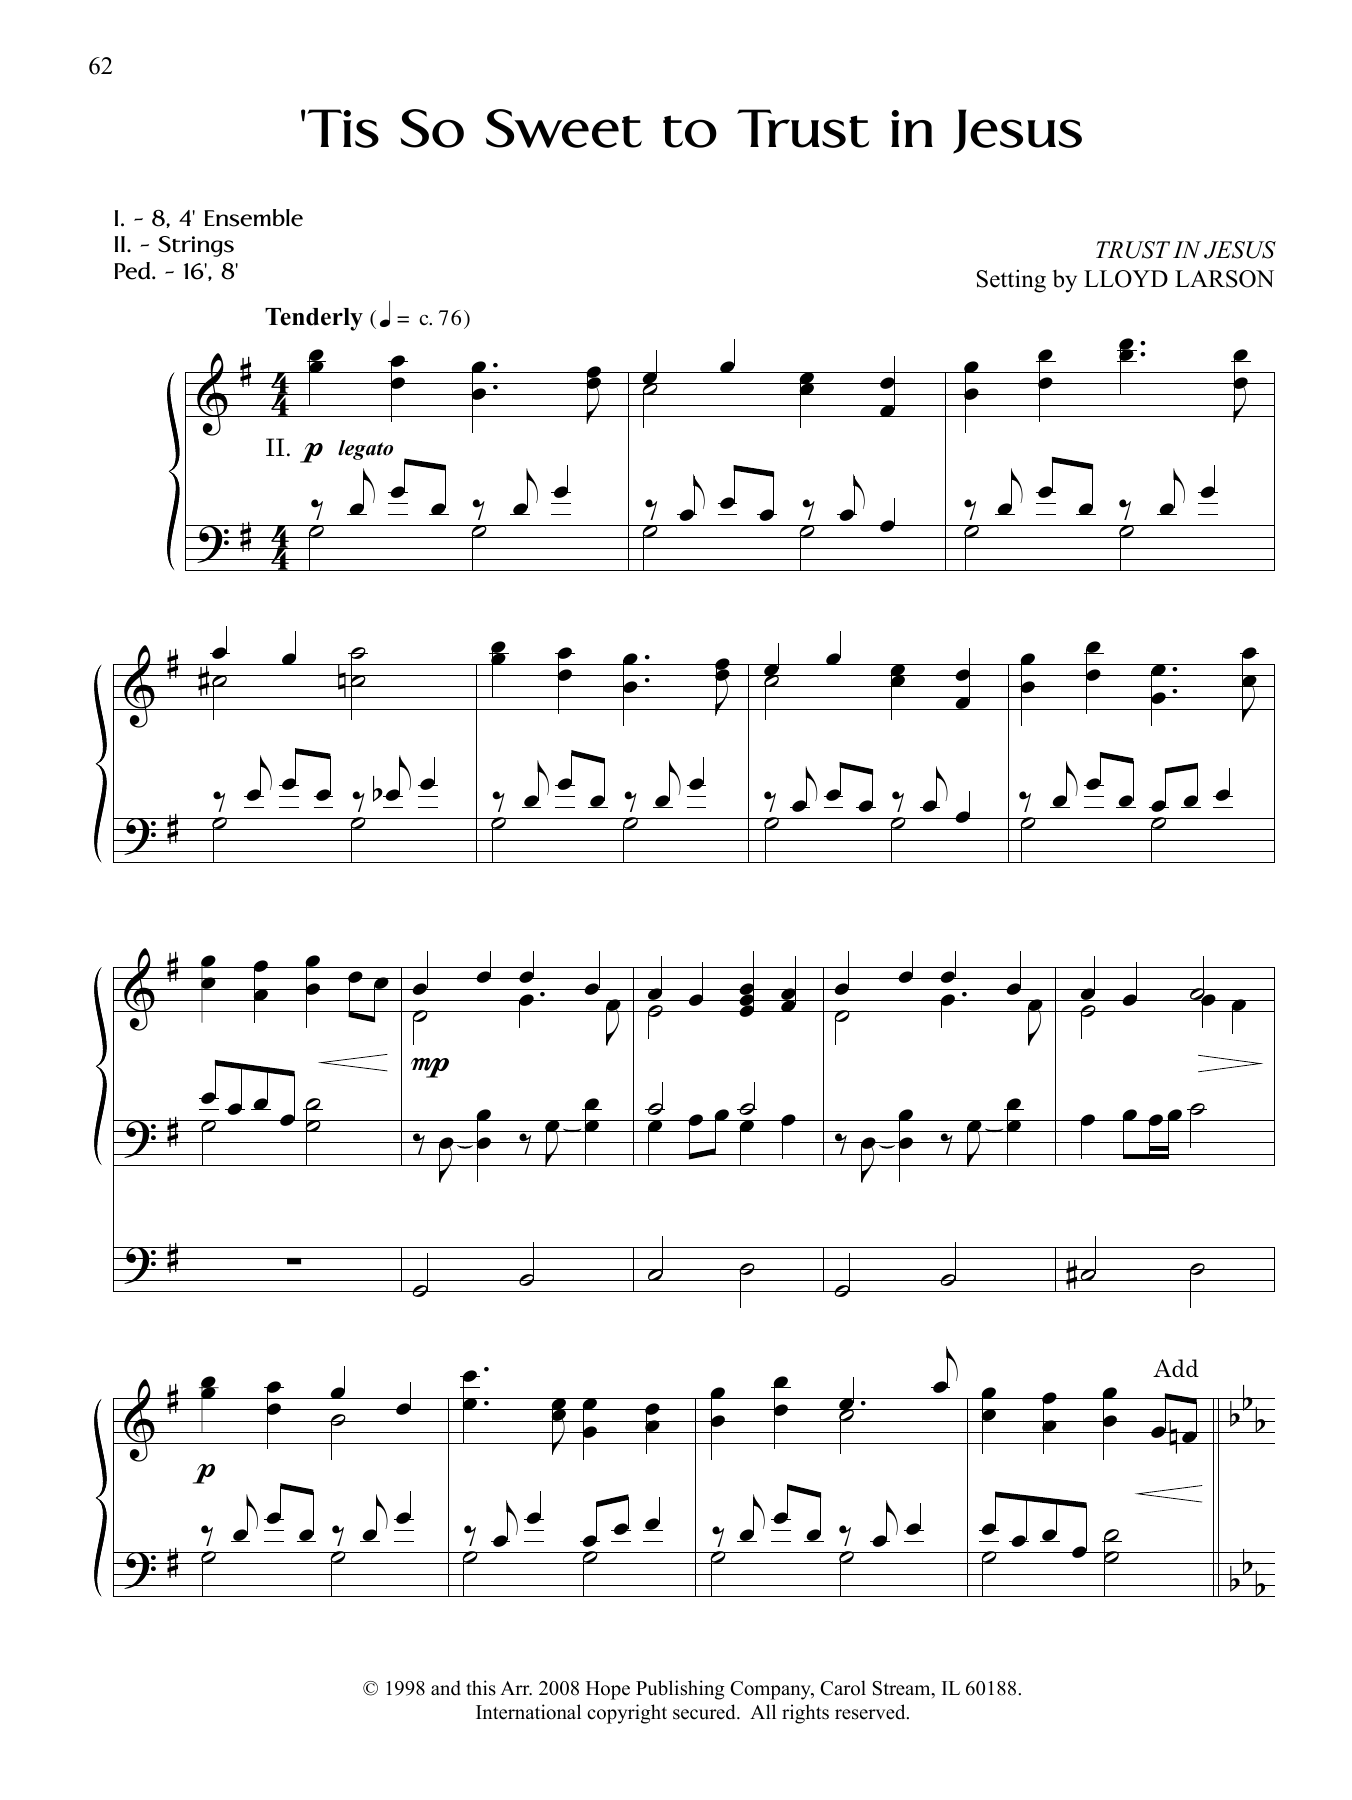 Lloyd Larson Tis So Sweet to Trust in Jesus Sheet Music Notes & Chords for Organ - Download or Print PDF